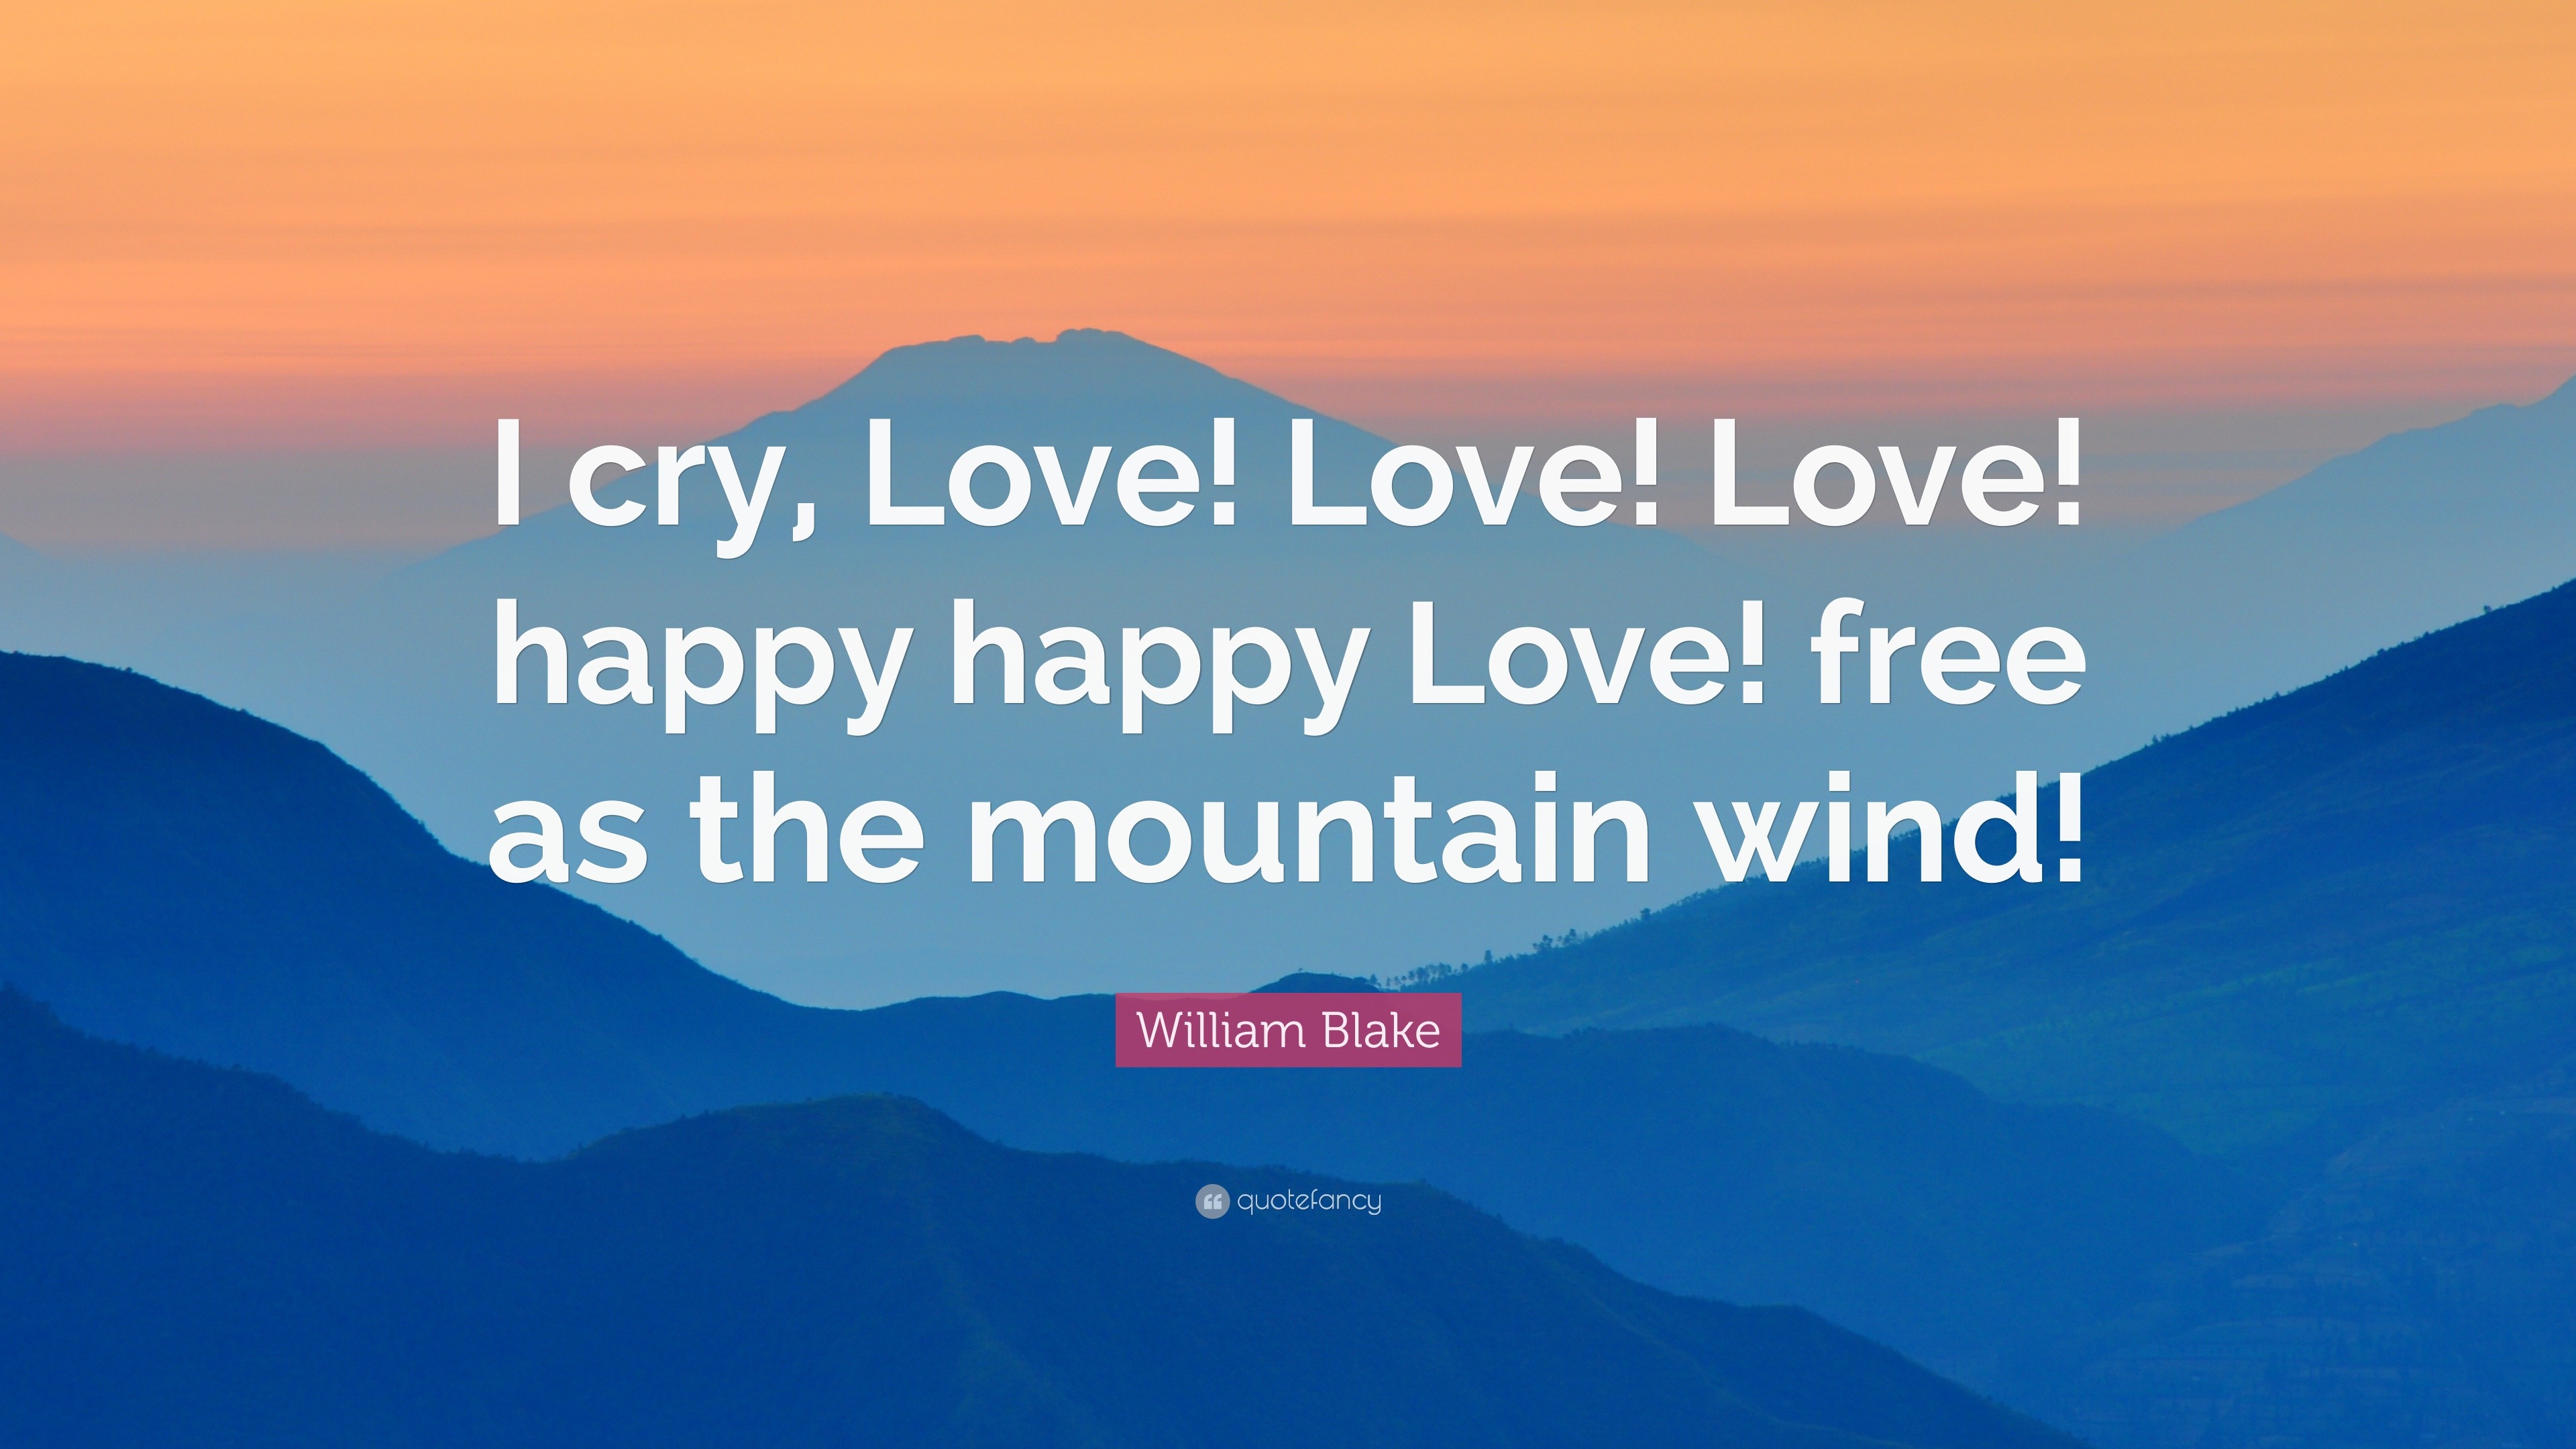 William Blake Quote “I cry Love Love Love happy happy